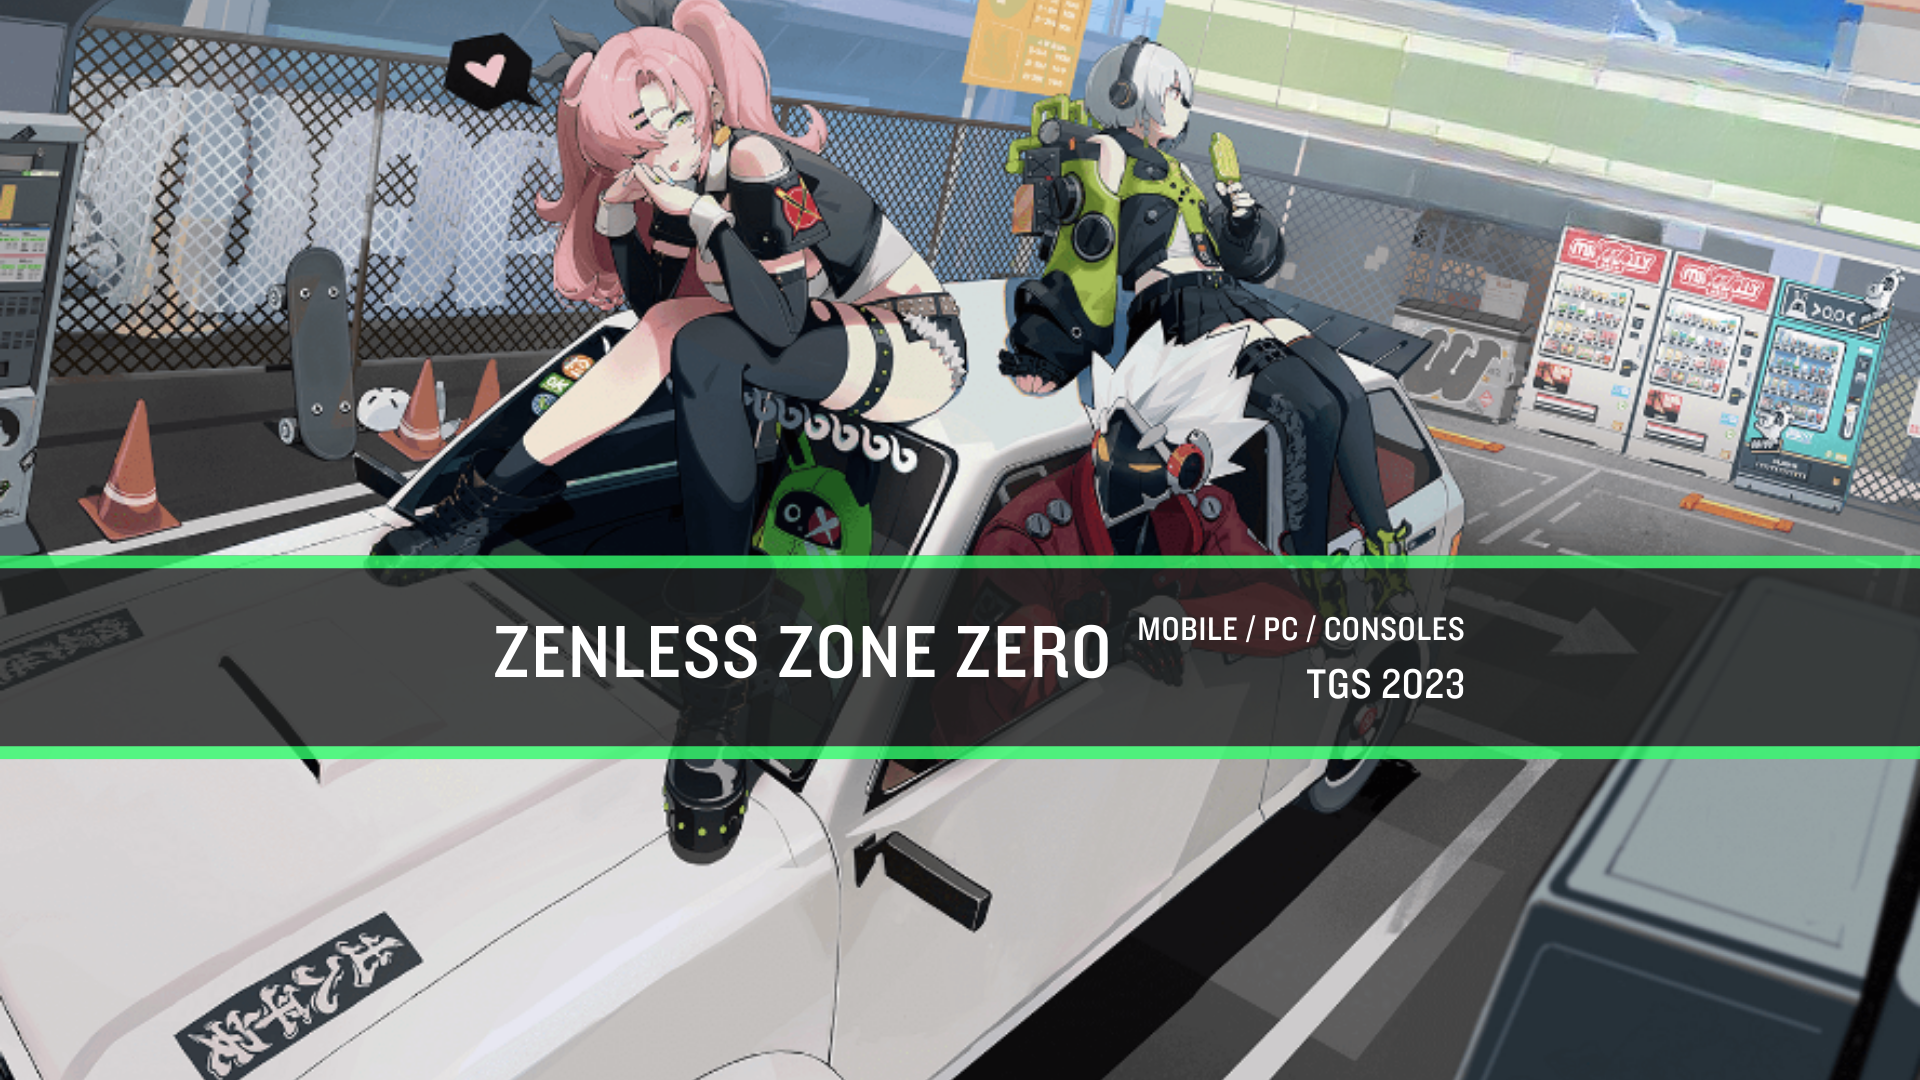 Zenless Zone Zero release date speculation